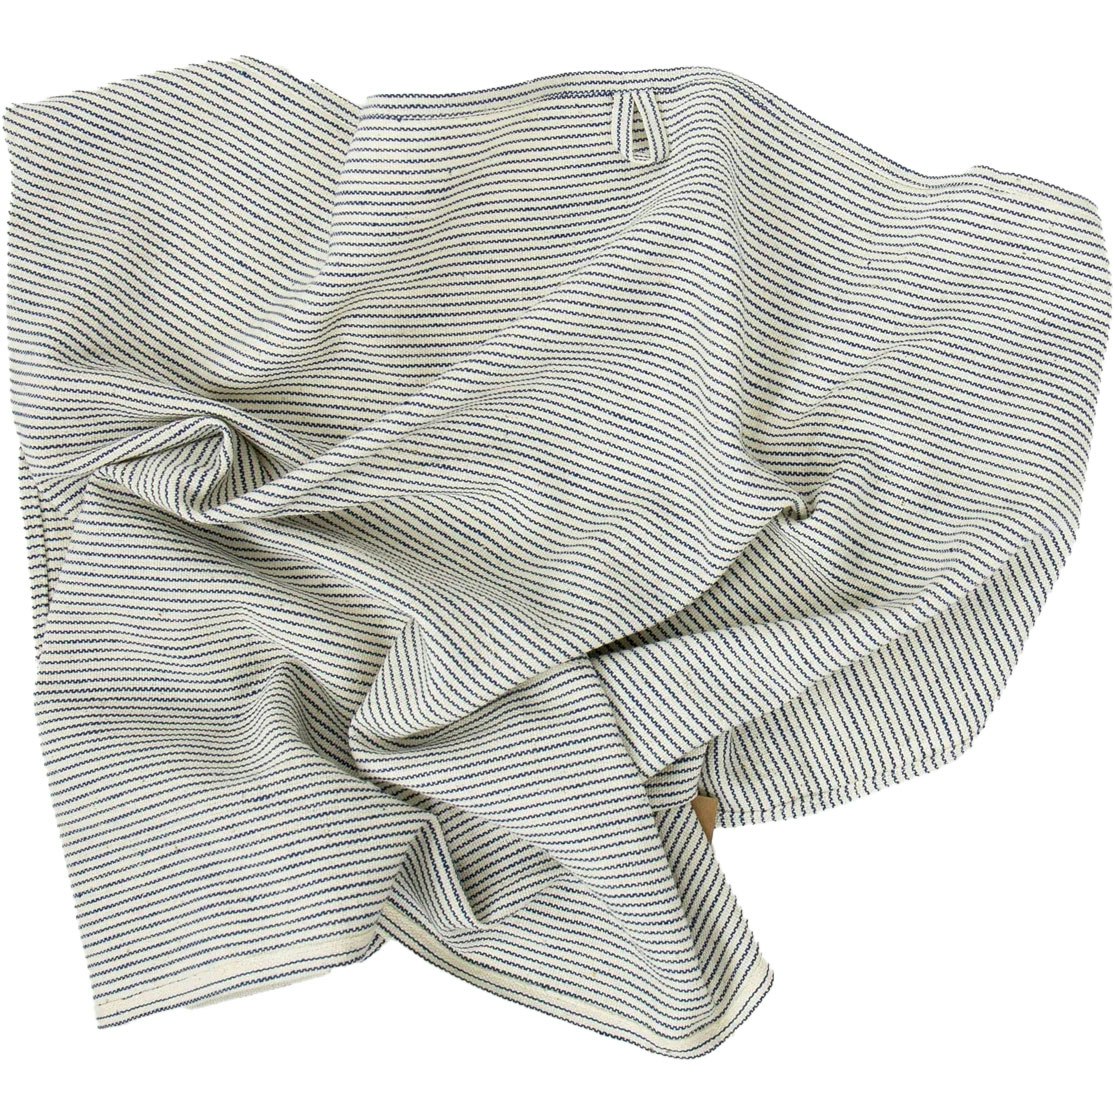 Raw Kitchen Towel 2-pack, light grey - Aida @ RoyalDesign